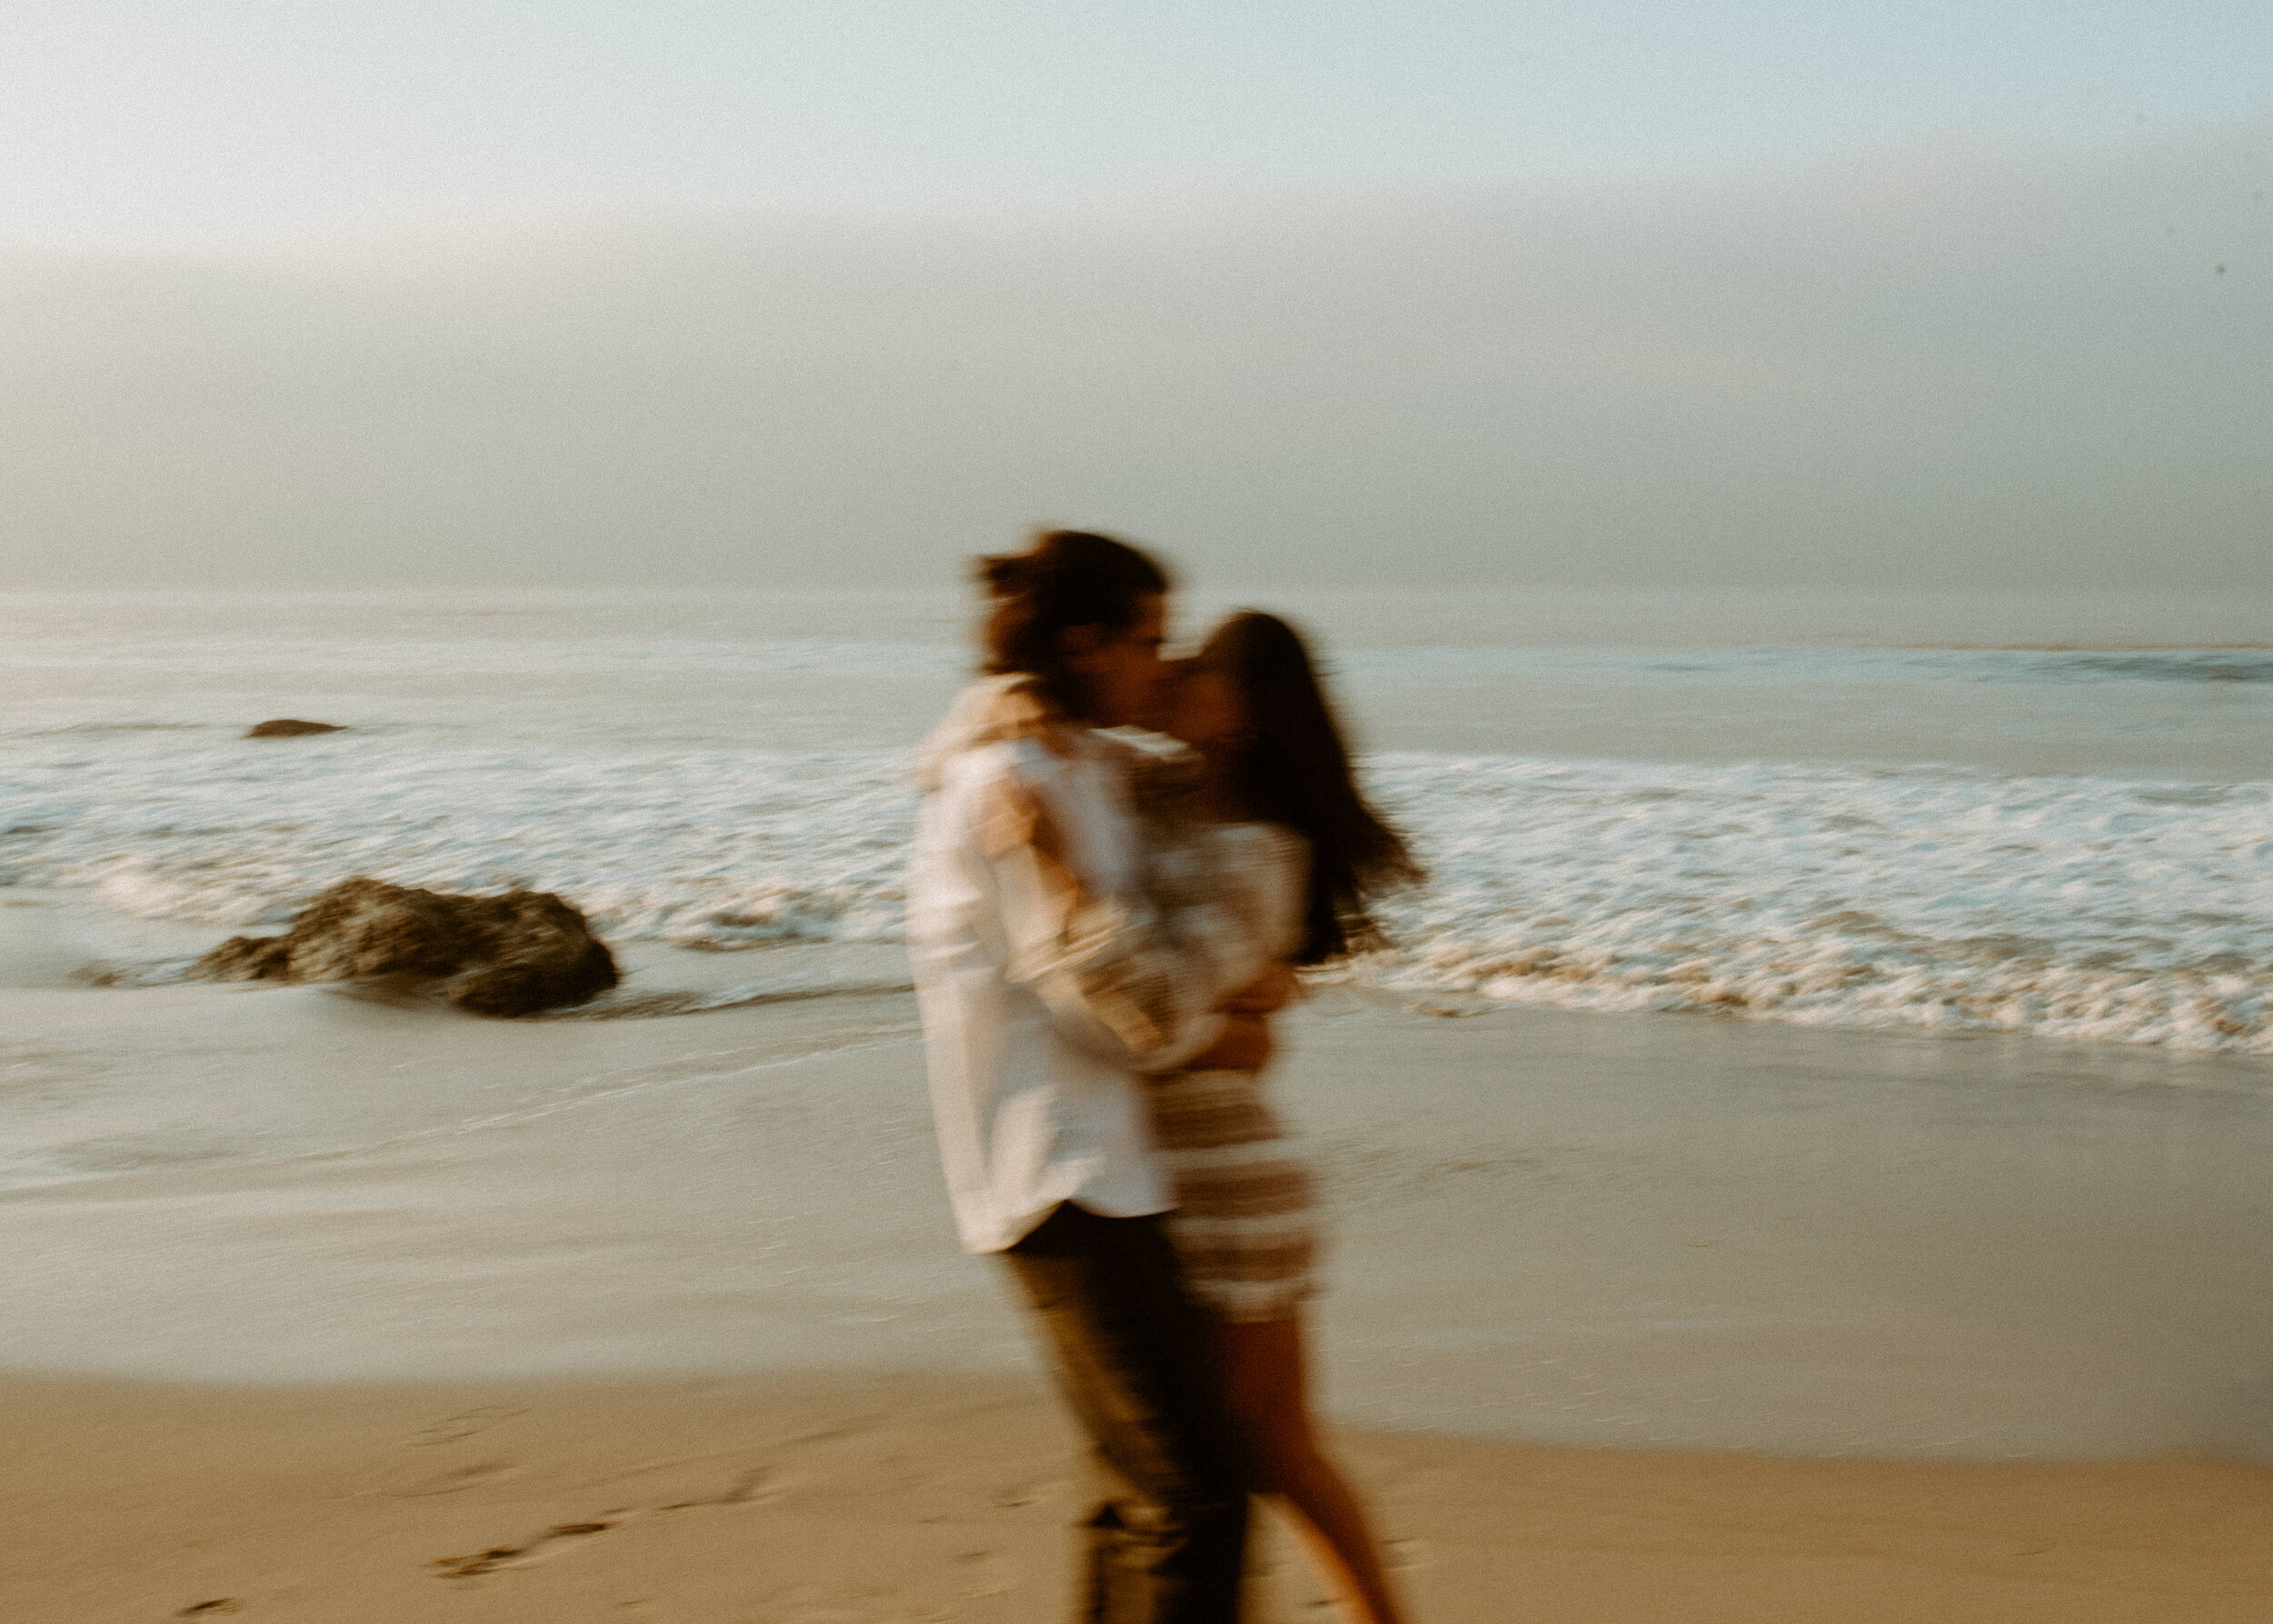 Sunrise Malibu Couples Photos | El Matador Beach Engagement Session | creative couples poses | sunrise at el matador beach | earthy neutral color couples outfits